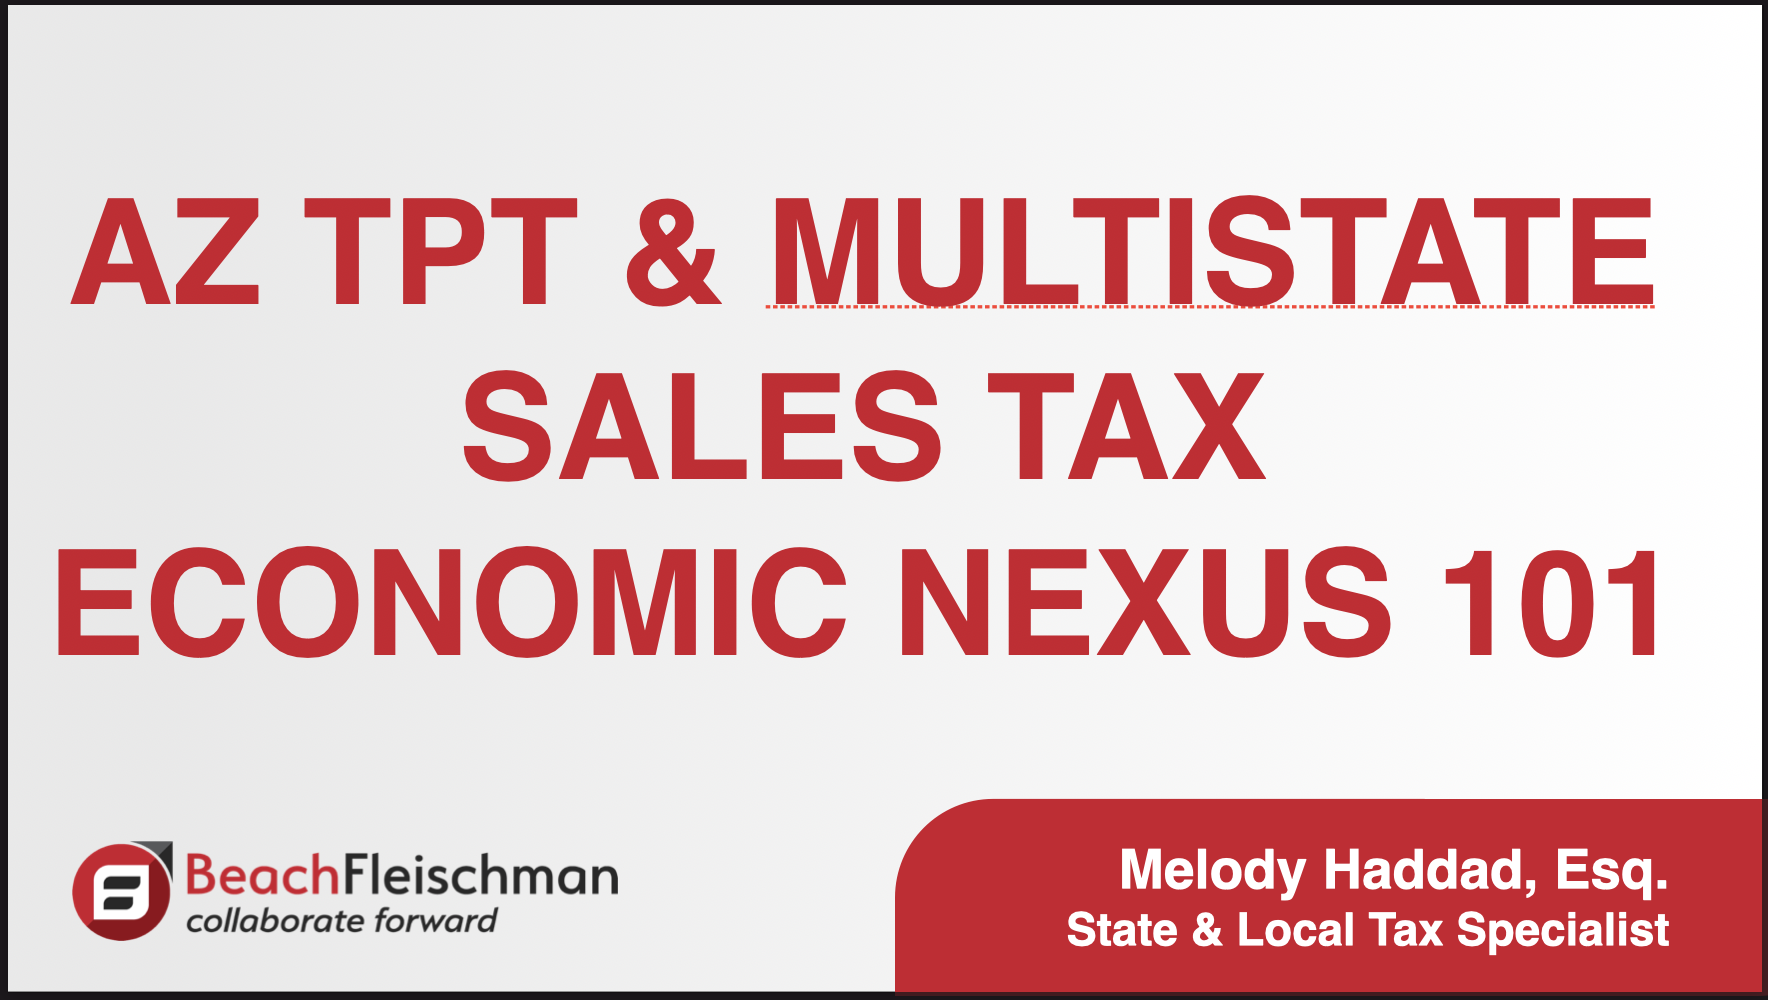 AZ TPT & Multistate Sales Tax Economic Nexus 101 Video Thumbnail